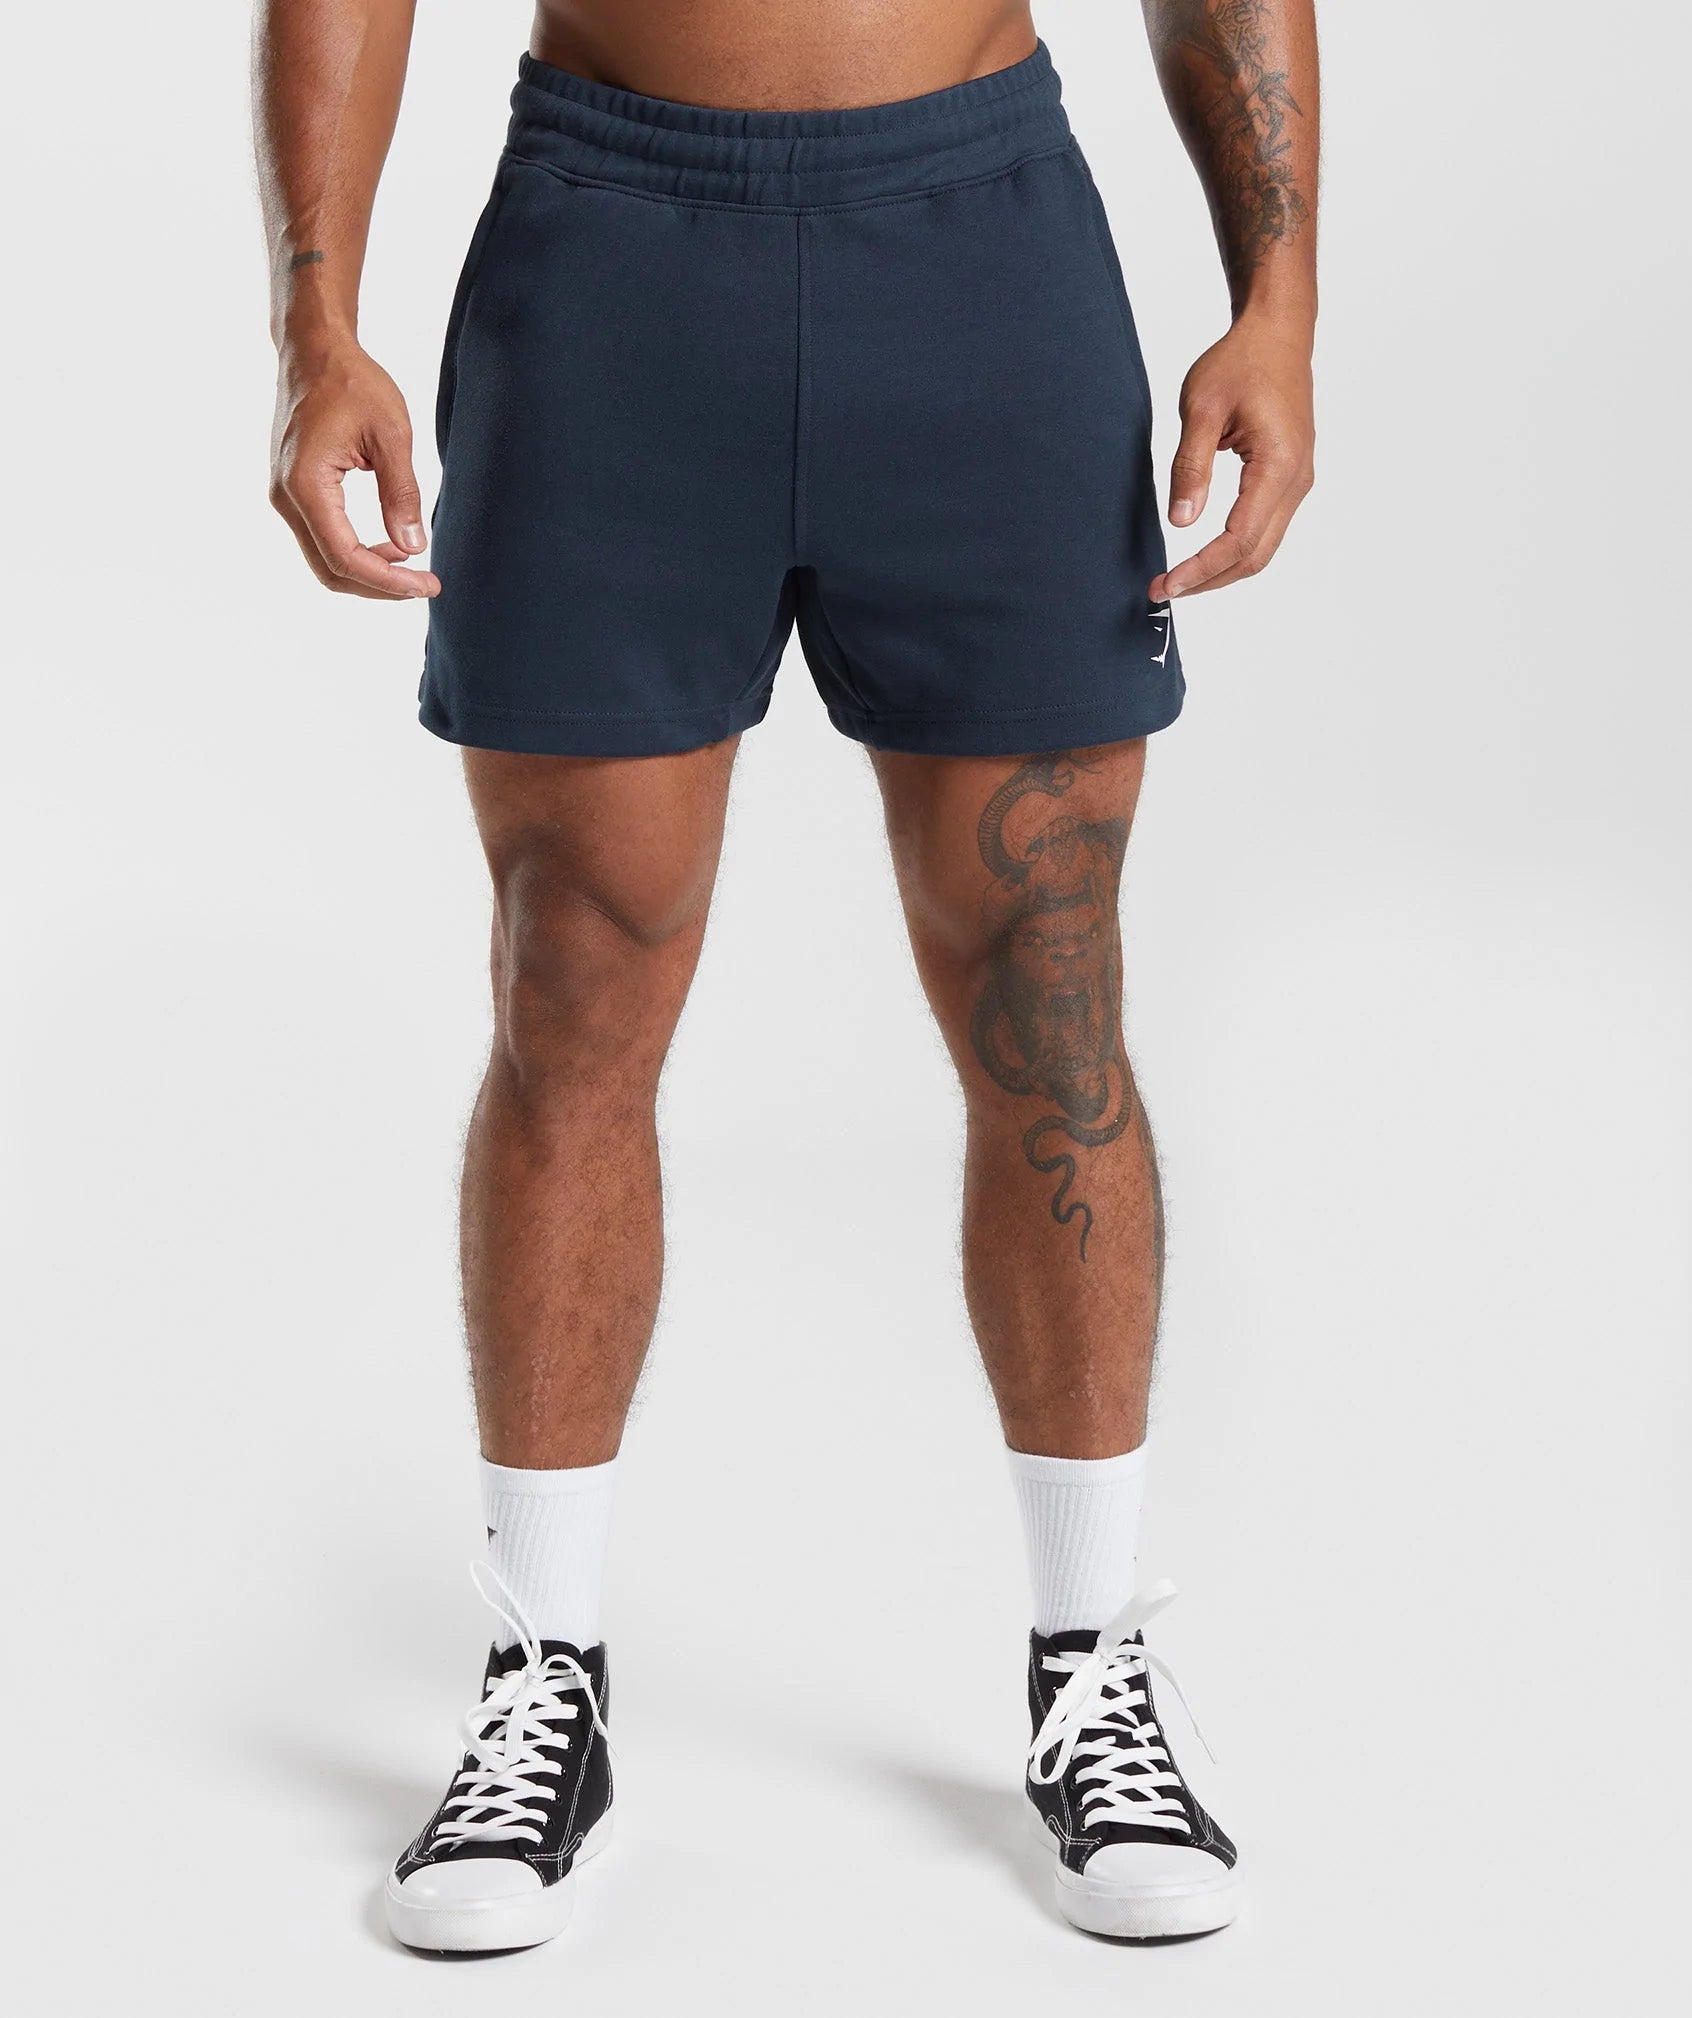 React 5" Shorts in Navy